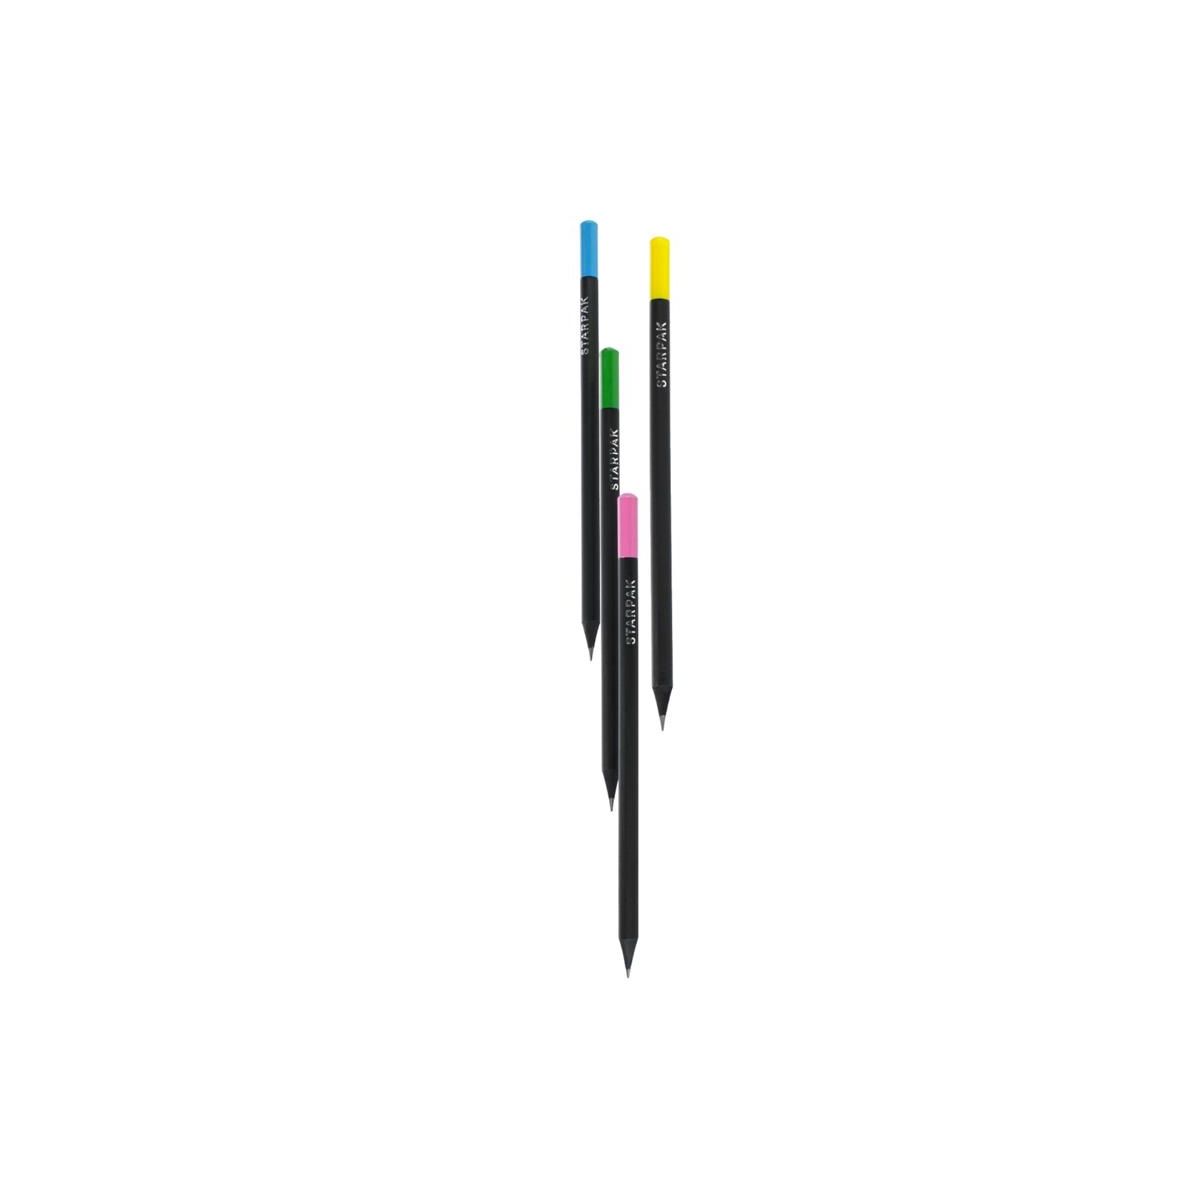 Ołówek Starpak HB (472409)